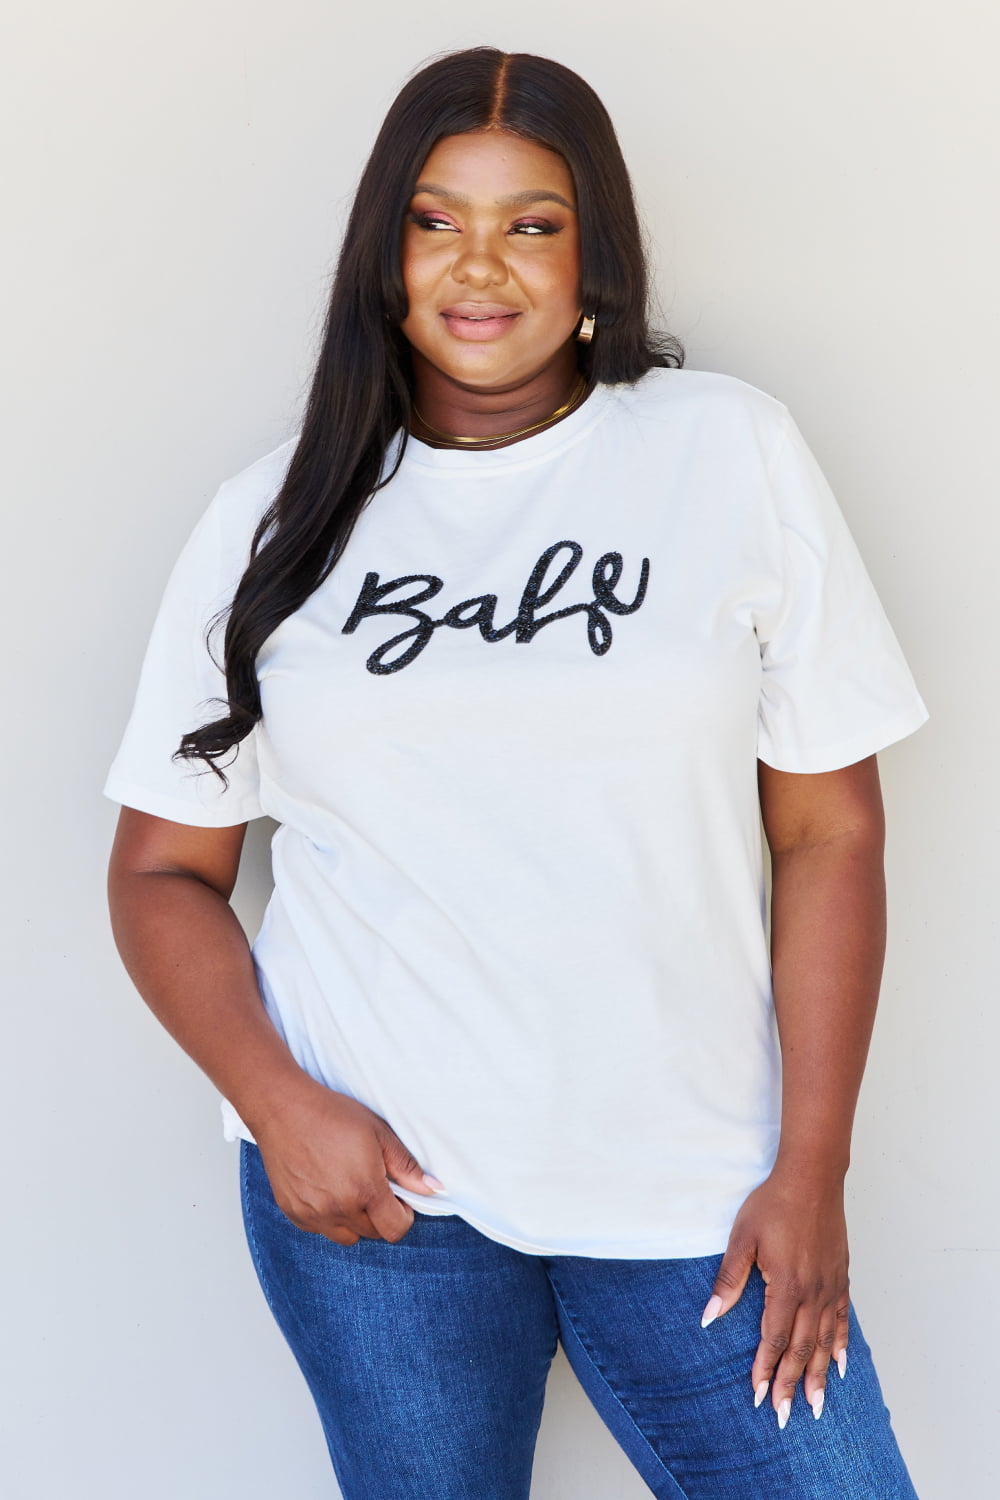 Davi & Dani "Babe" Full Size Glitter Lettering Printed T-Shirt in White